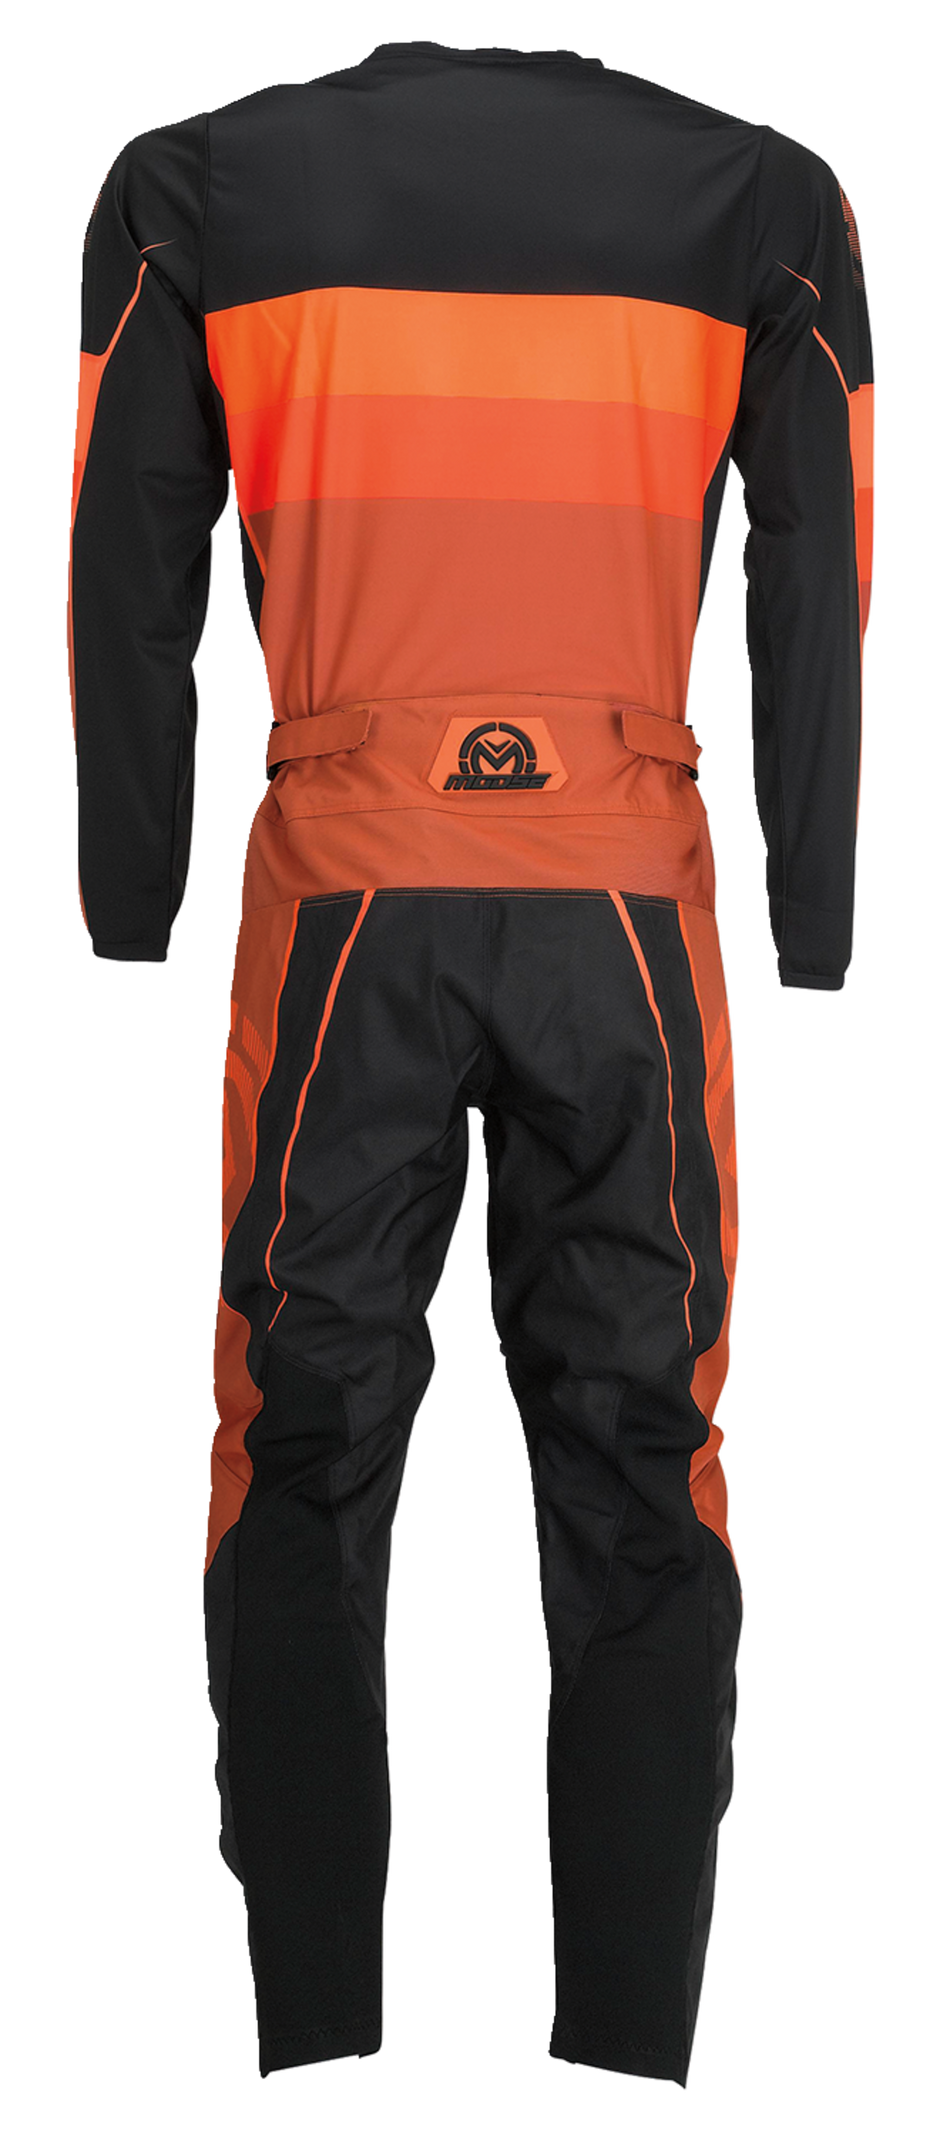 Camiseta MOOSE RACING Qualifier® - Naranja/Gris - Grande 2910-7198 